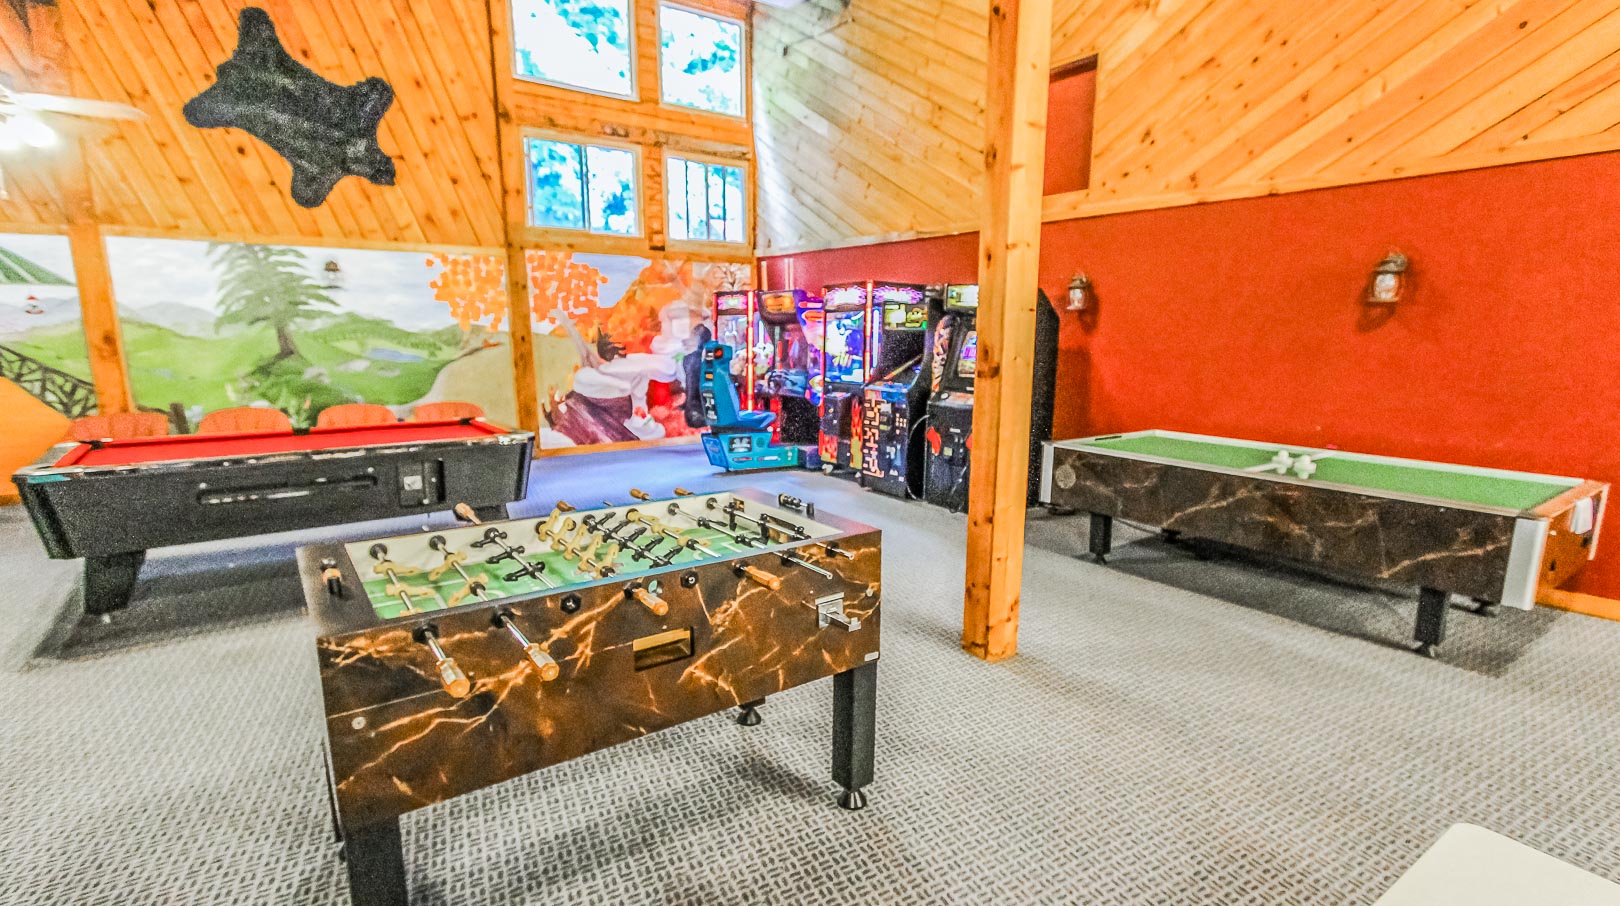 An enjoyable game room at VRI's Smoketree lodge in North Carolina.